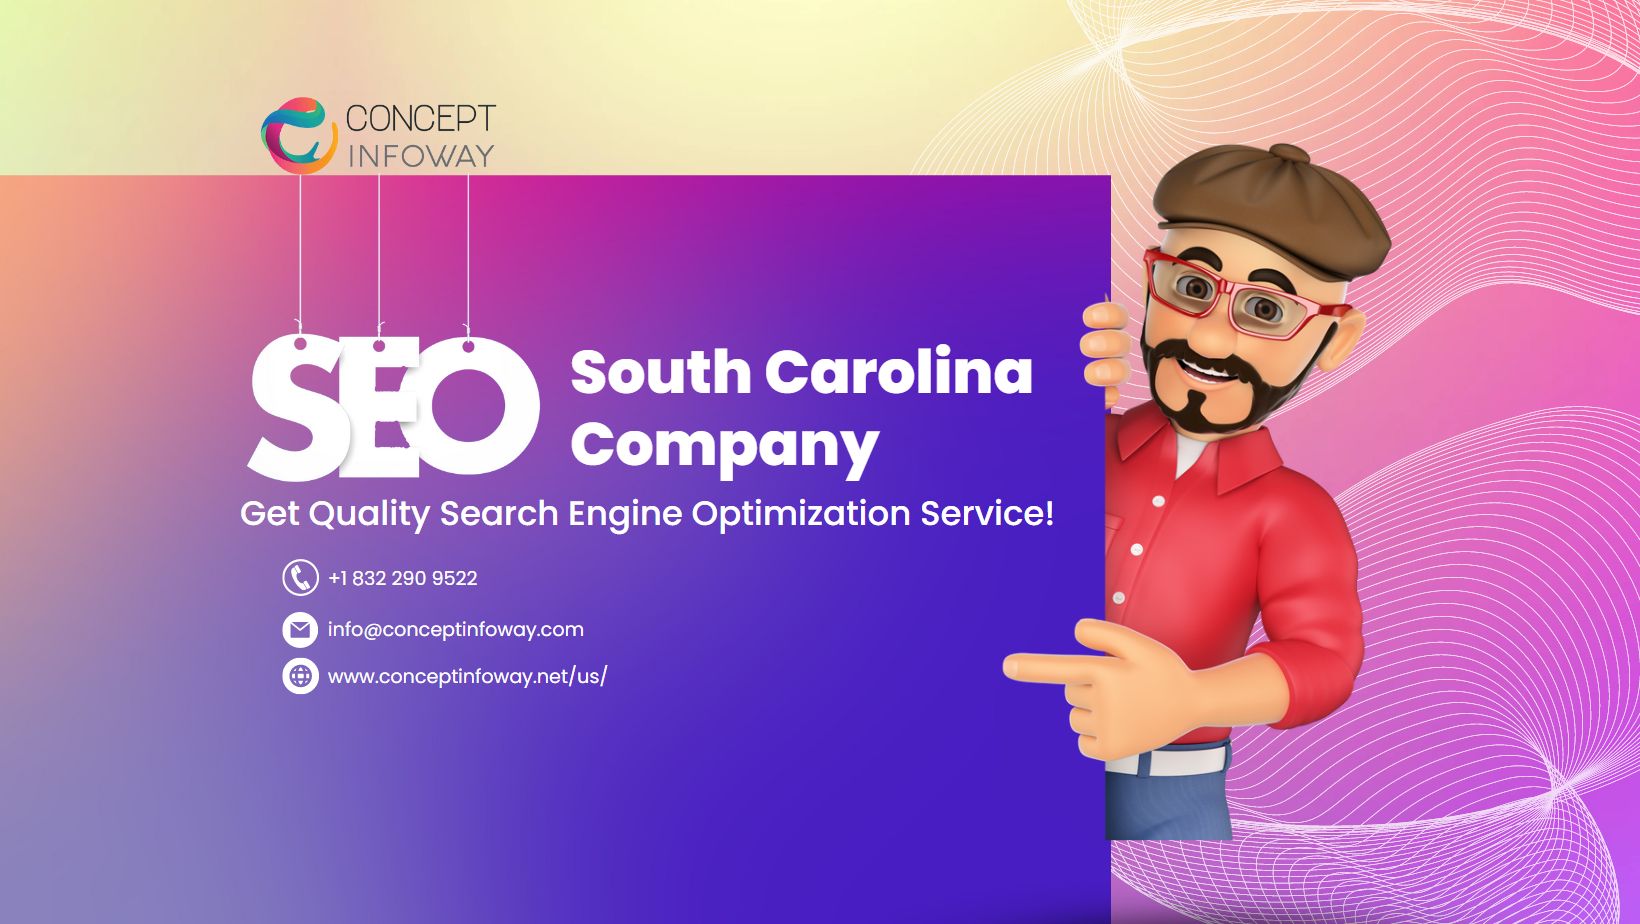 South Carolina SEO Company – Get Quality Search Engine Optimization Service!